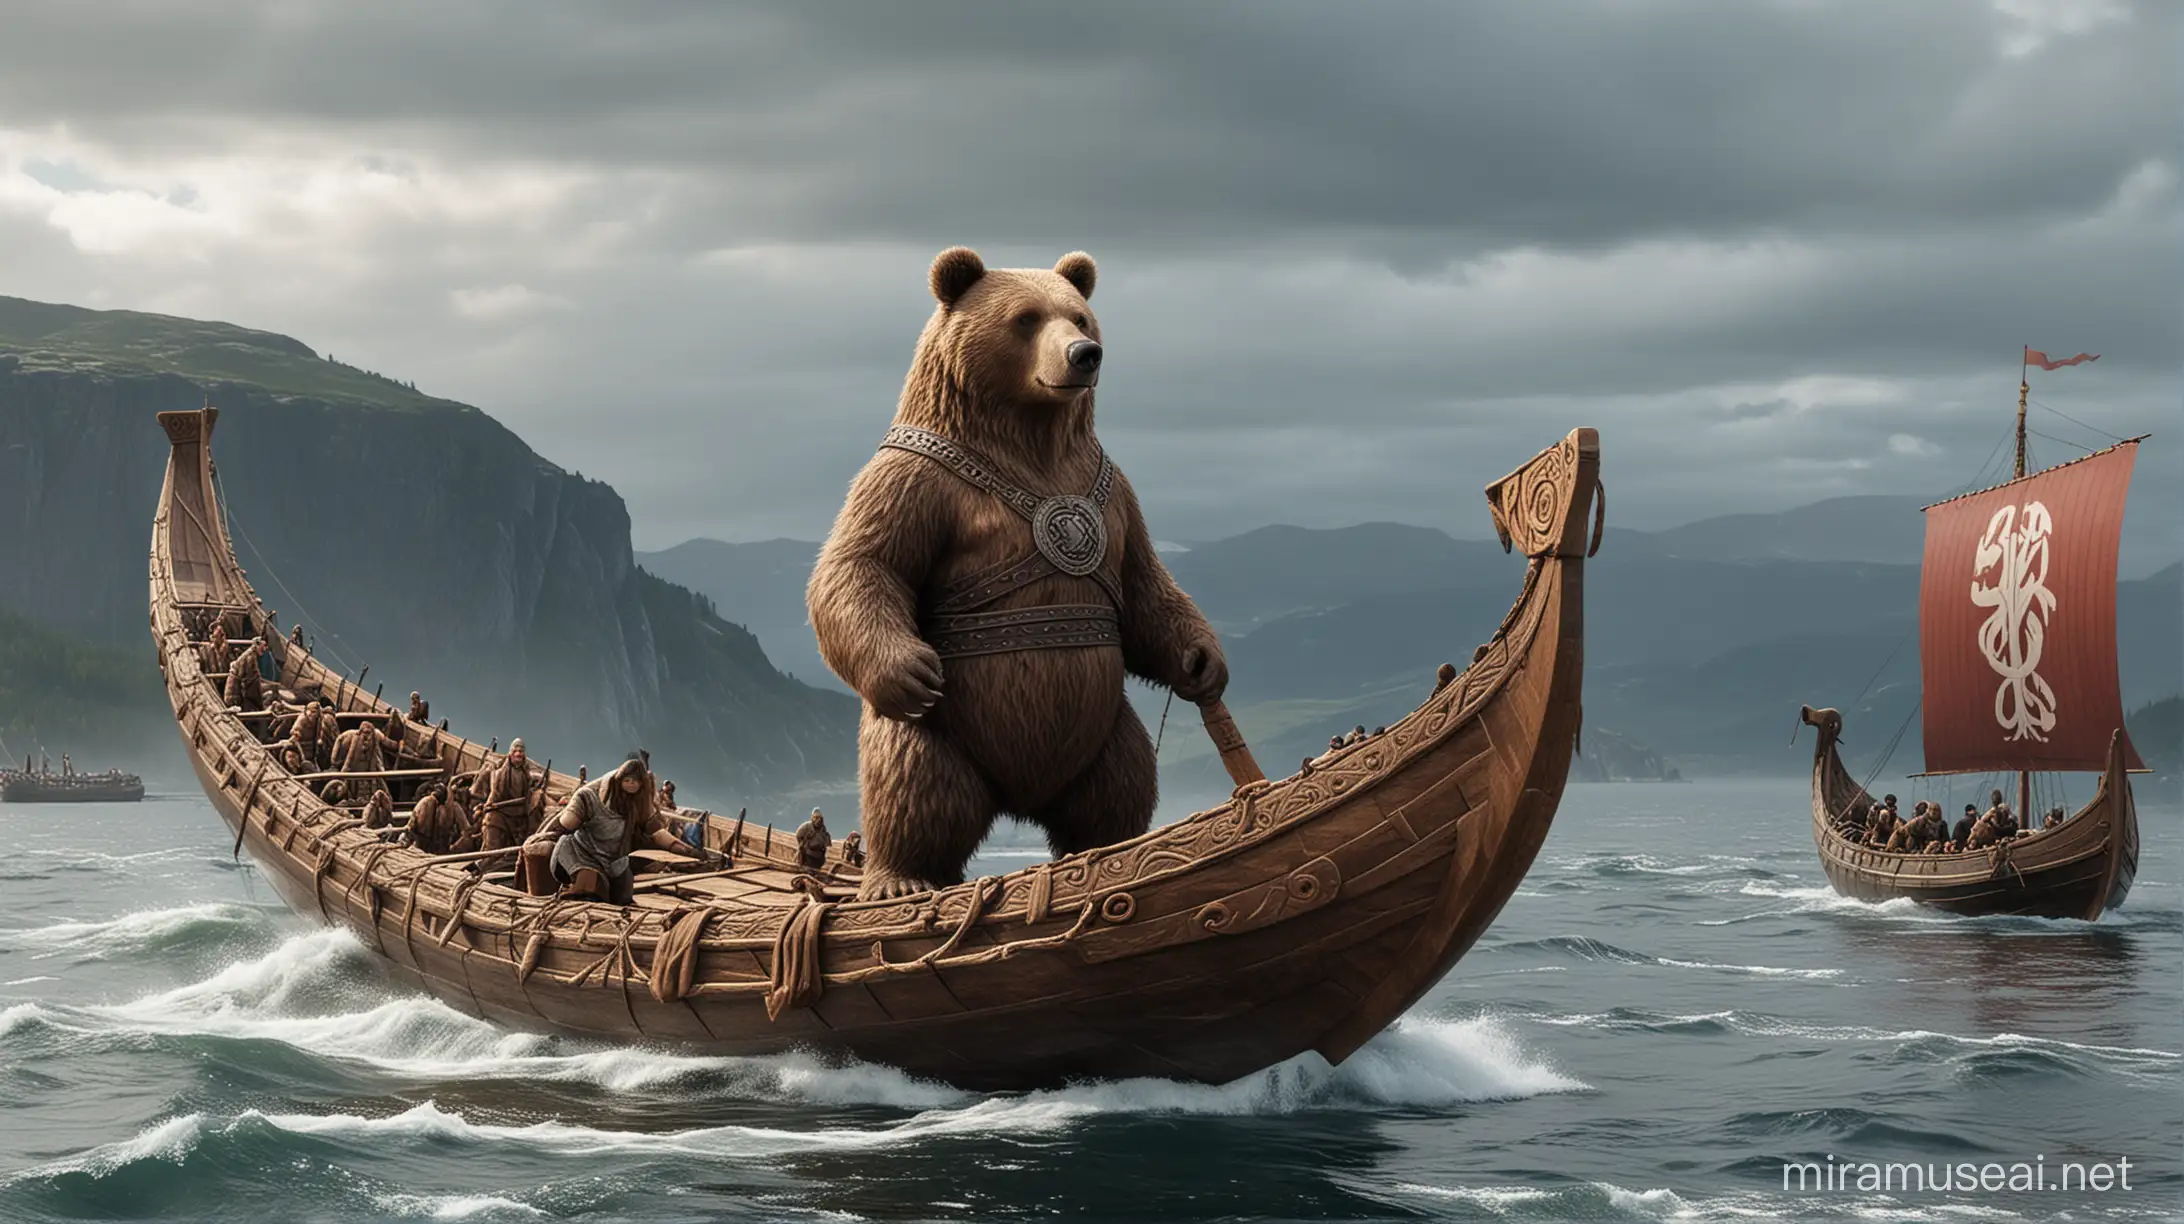 VikingThemed Adventure with a Cuddly Bear